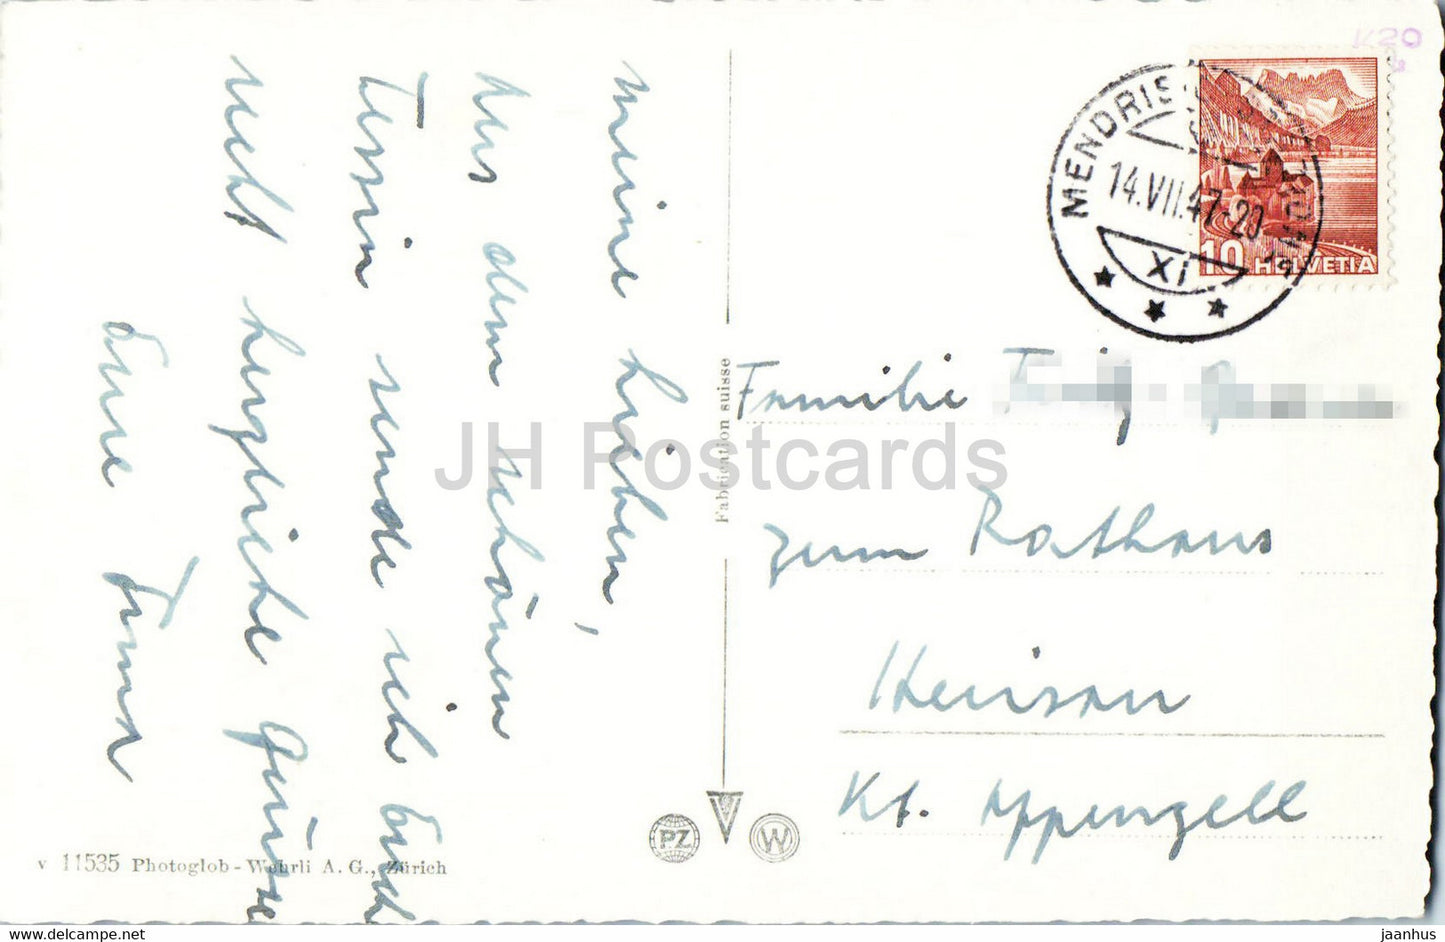 Lago di Lugano - San Salvatore - bateau - 11535 - 1947 - carte postale ancienne - Suisse - d'occasion